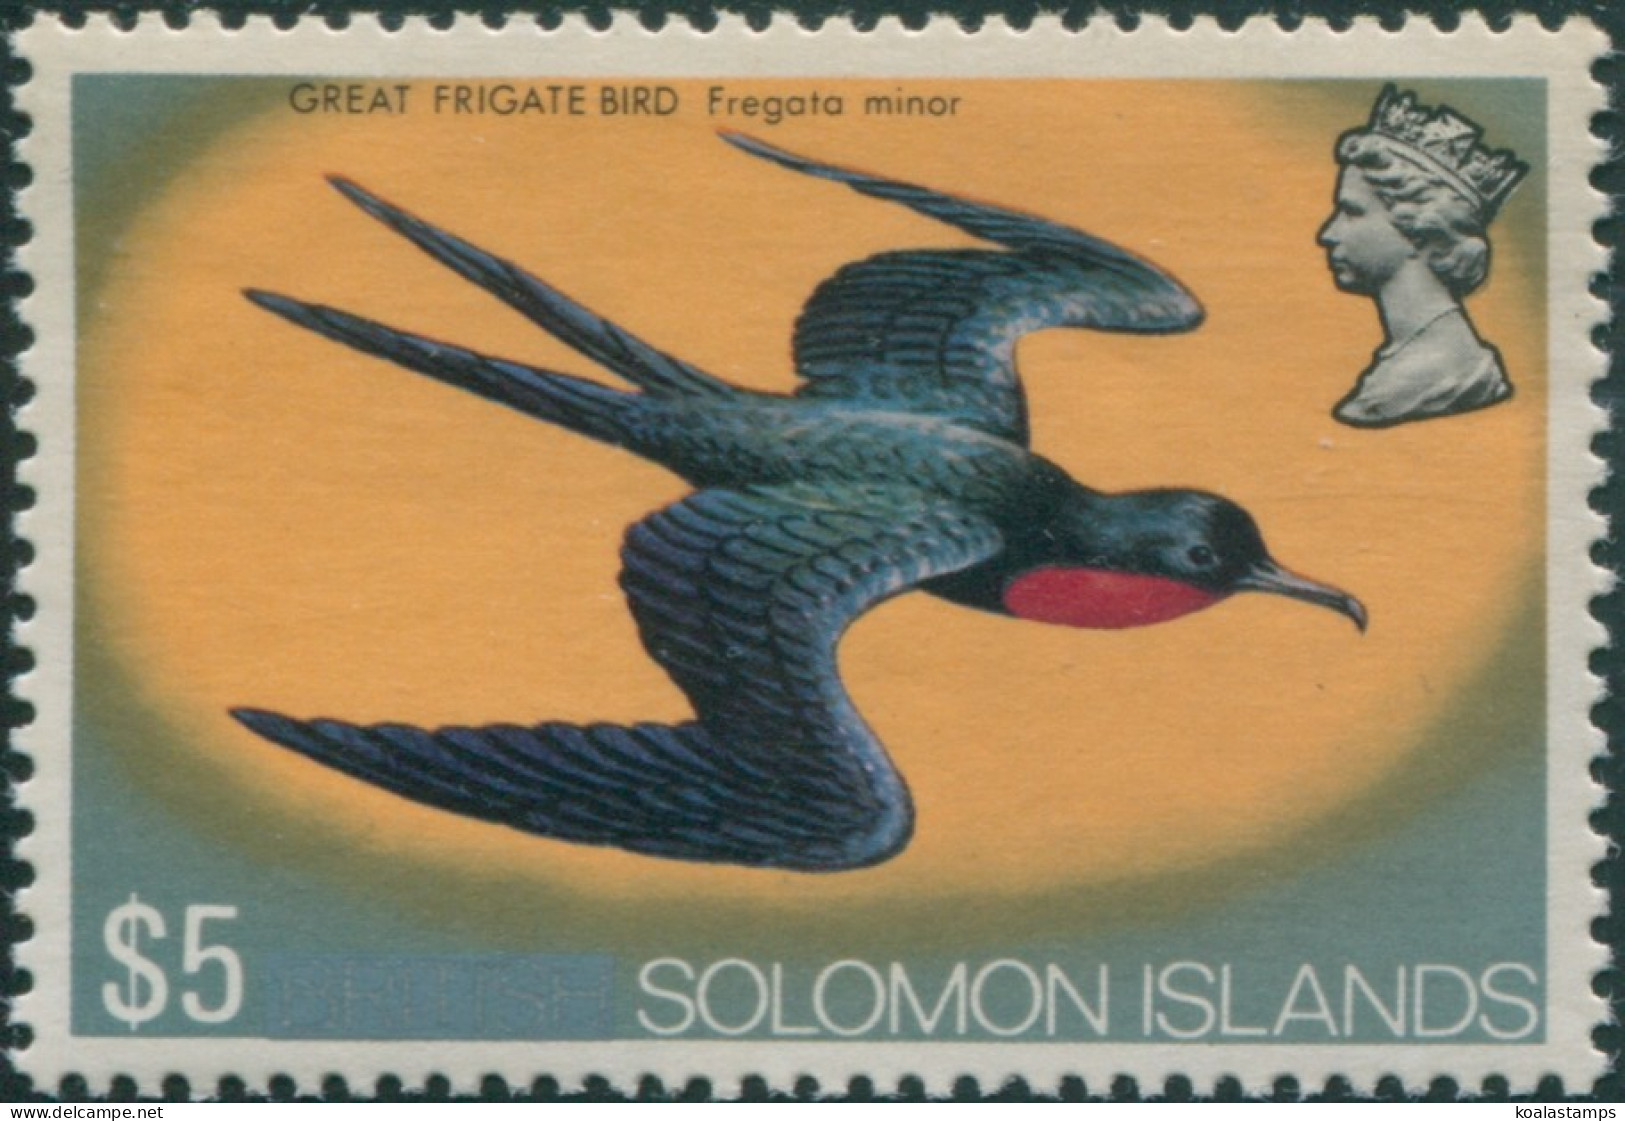 Solomon Islands 1975 SG300 $5 Great Frigate Bird MLH - Solomon Islands (1978-...)